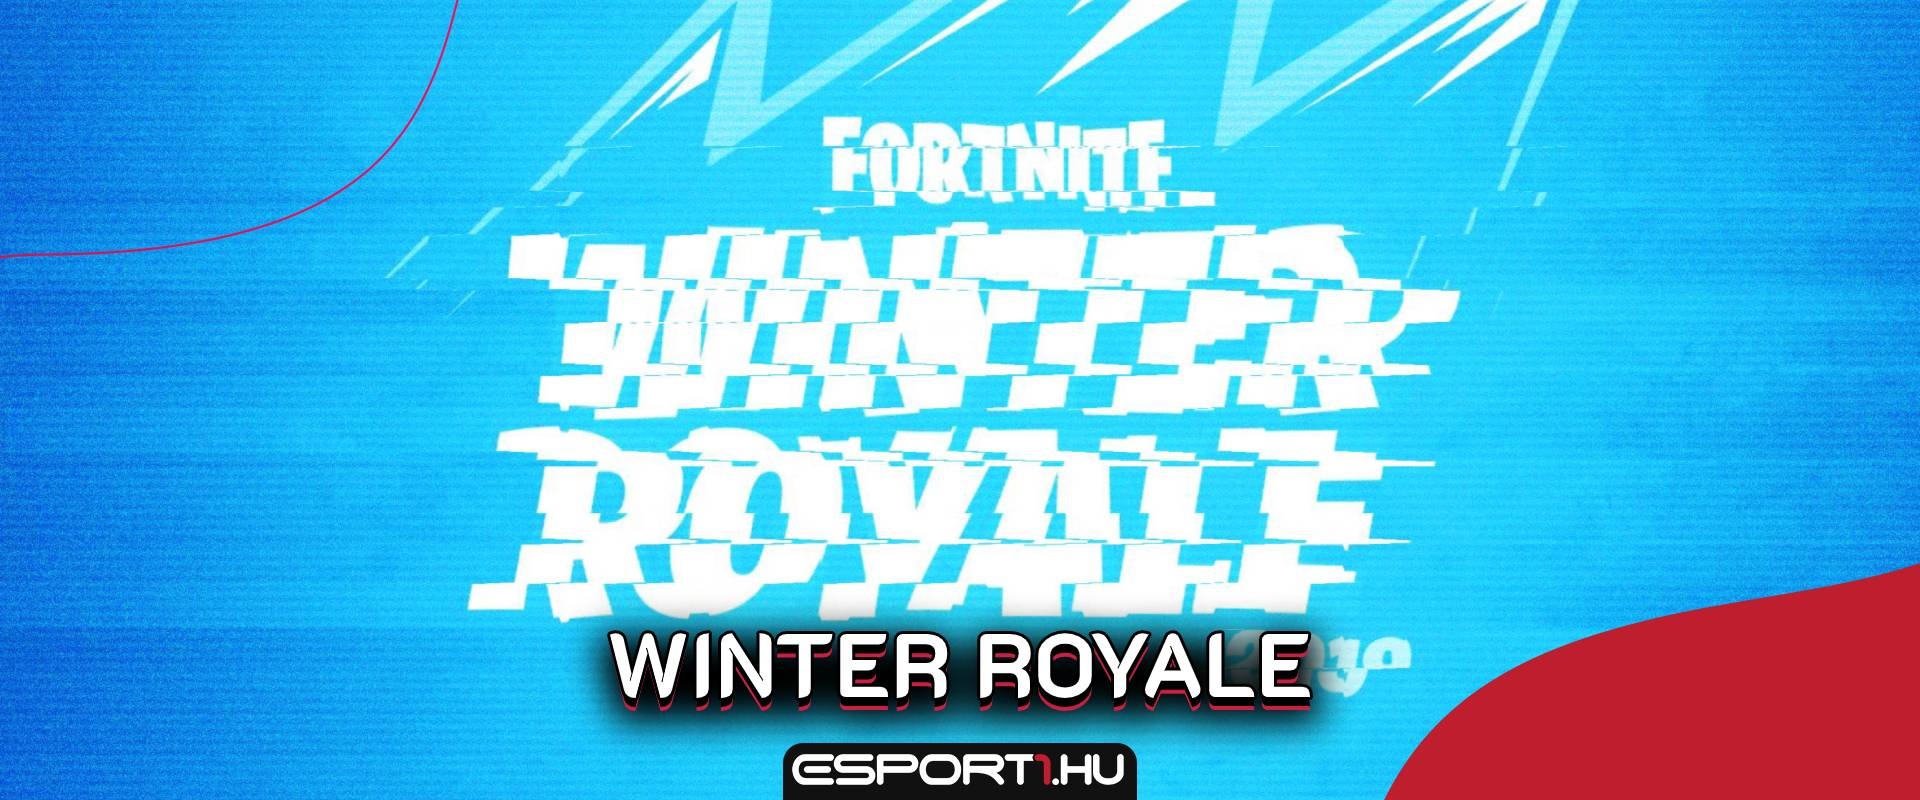 Csúnya glitch tette tönkre az idei Fortnite Winter Royale versenyeit